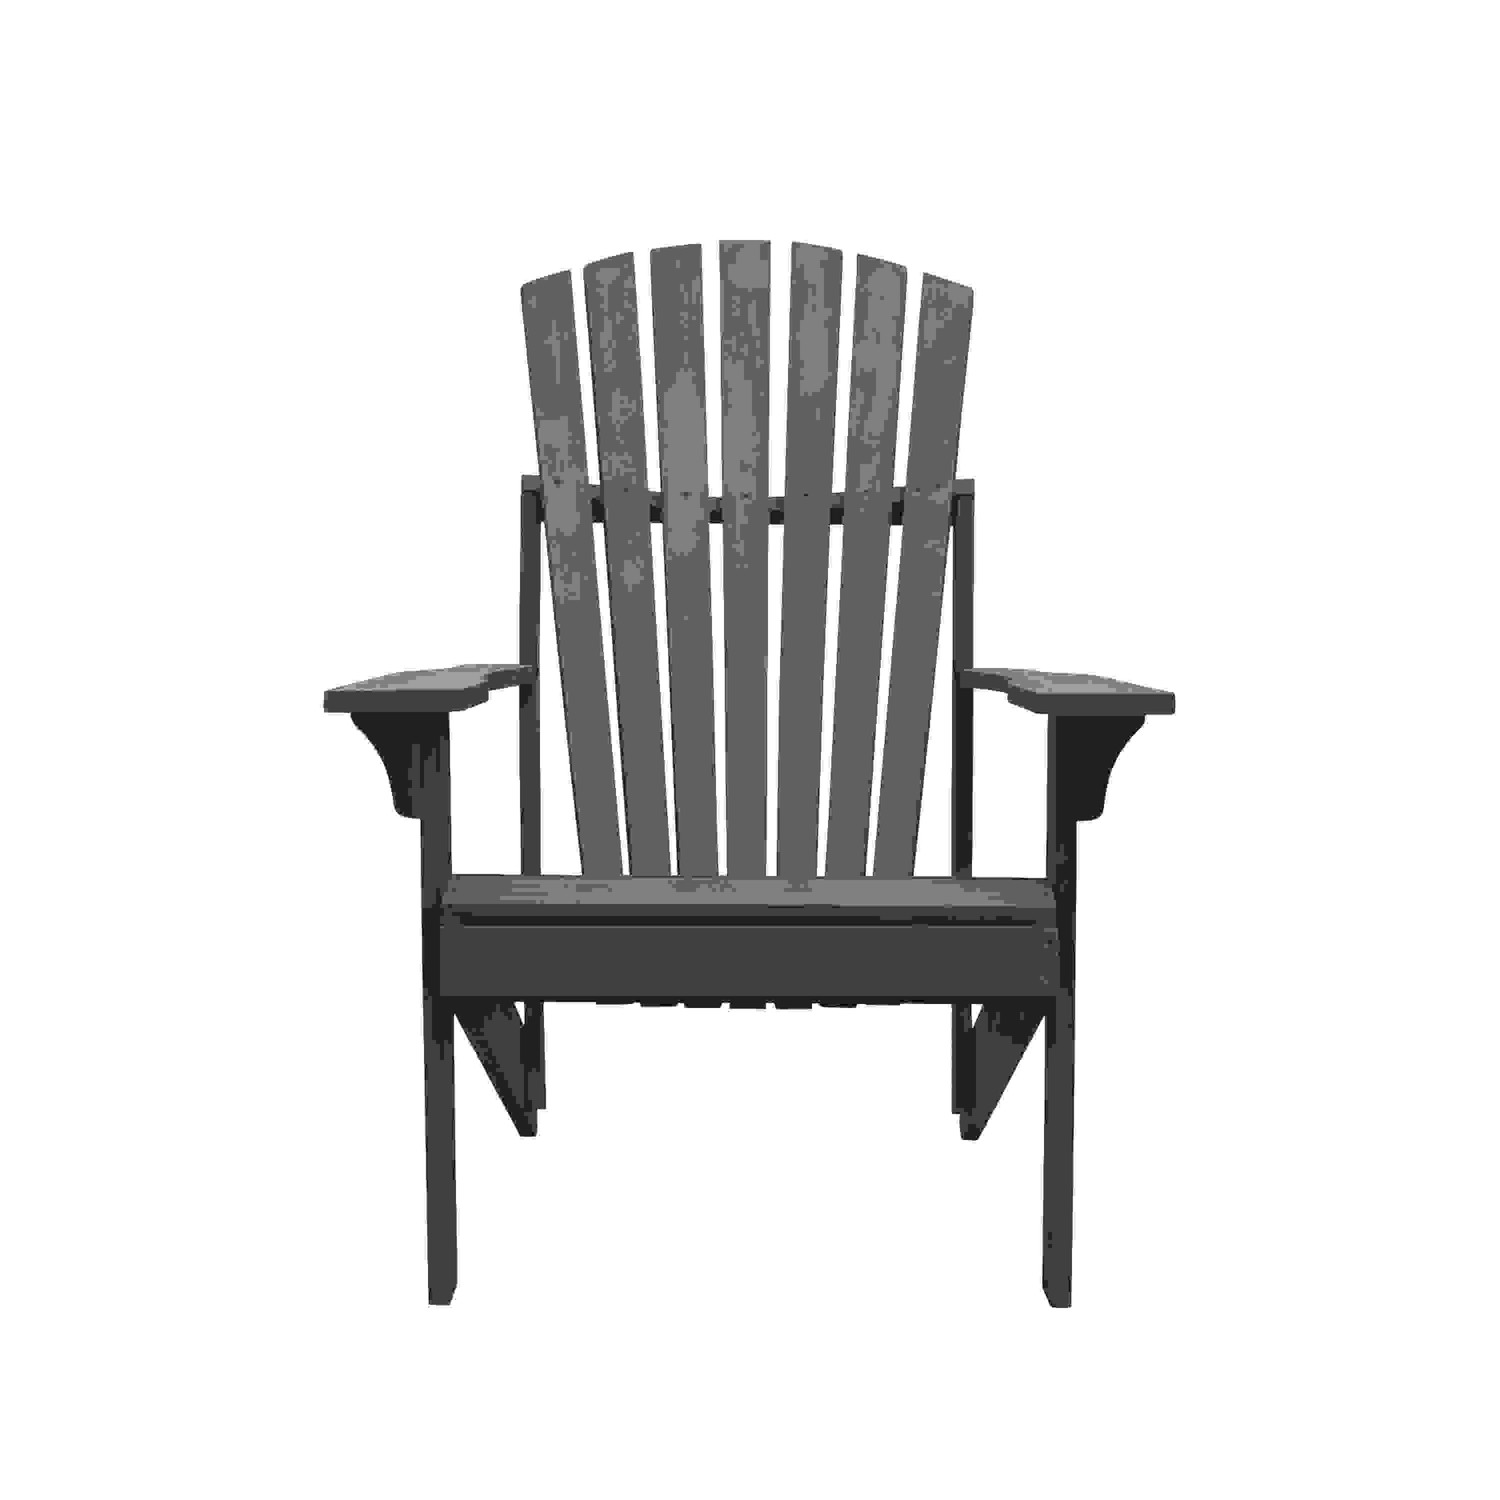 Renaissance Outdoor Patio Wood Adirondack Chair